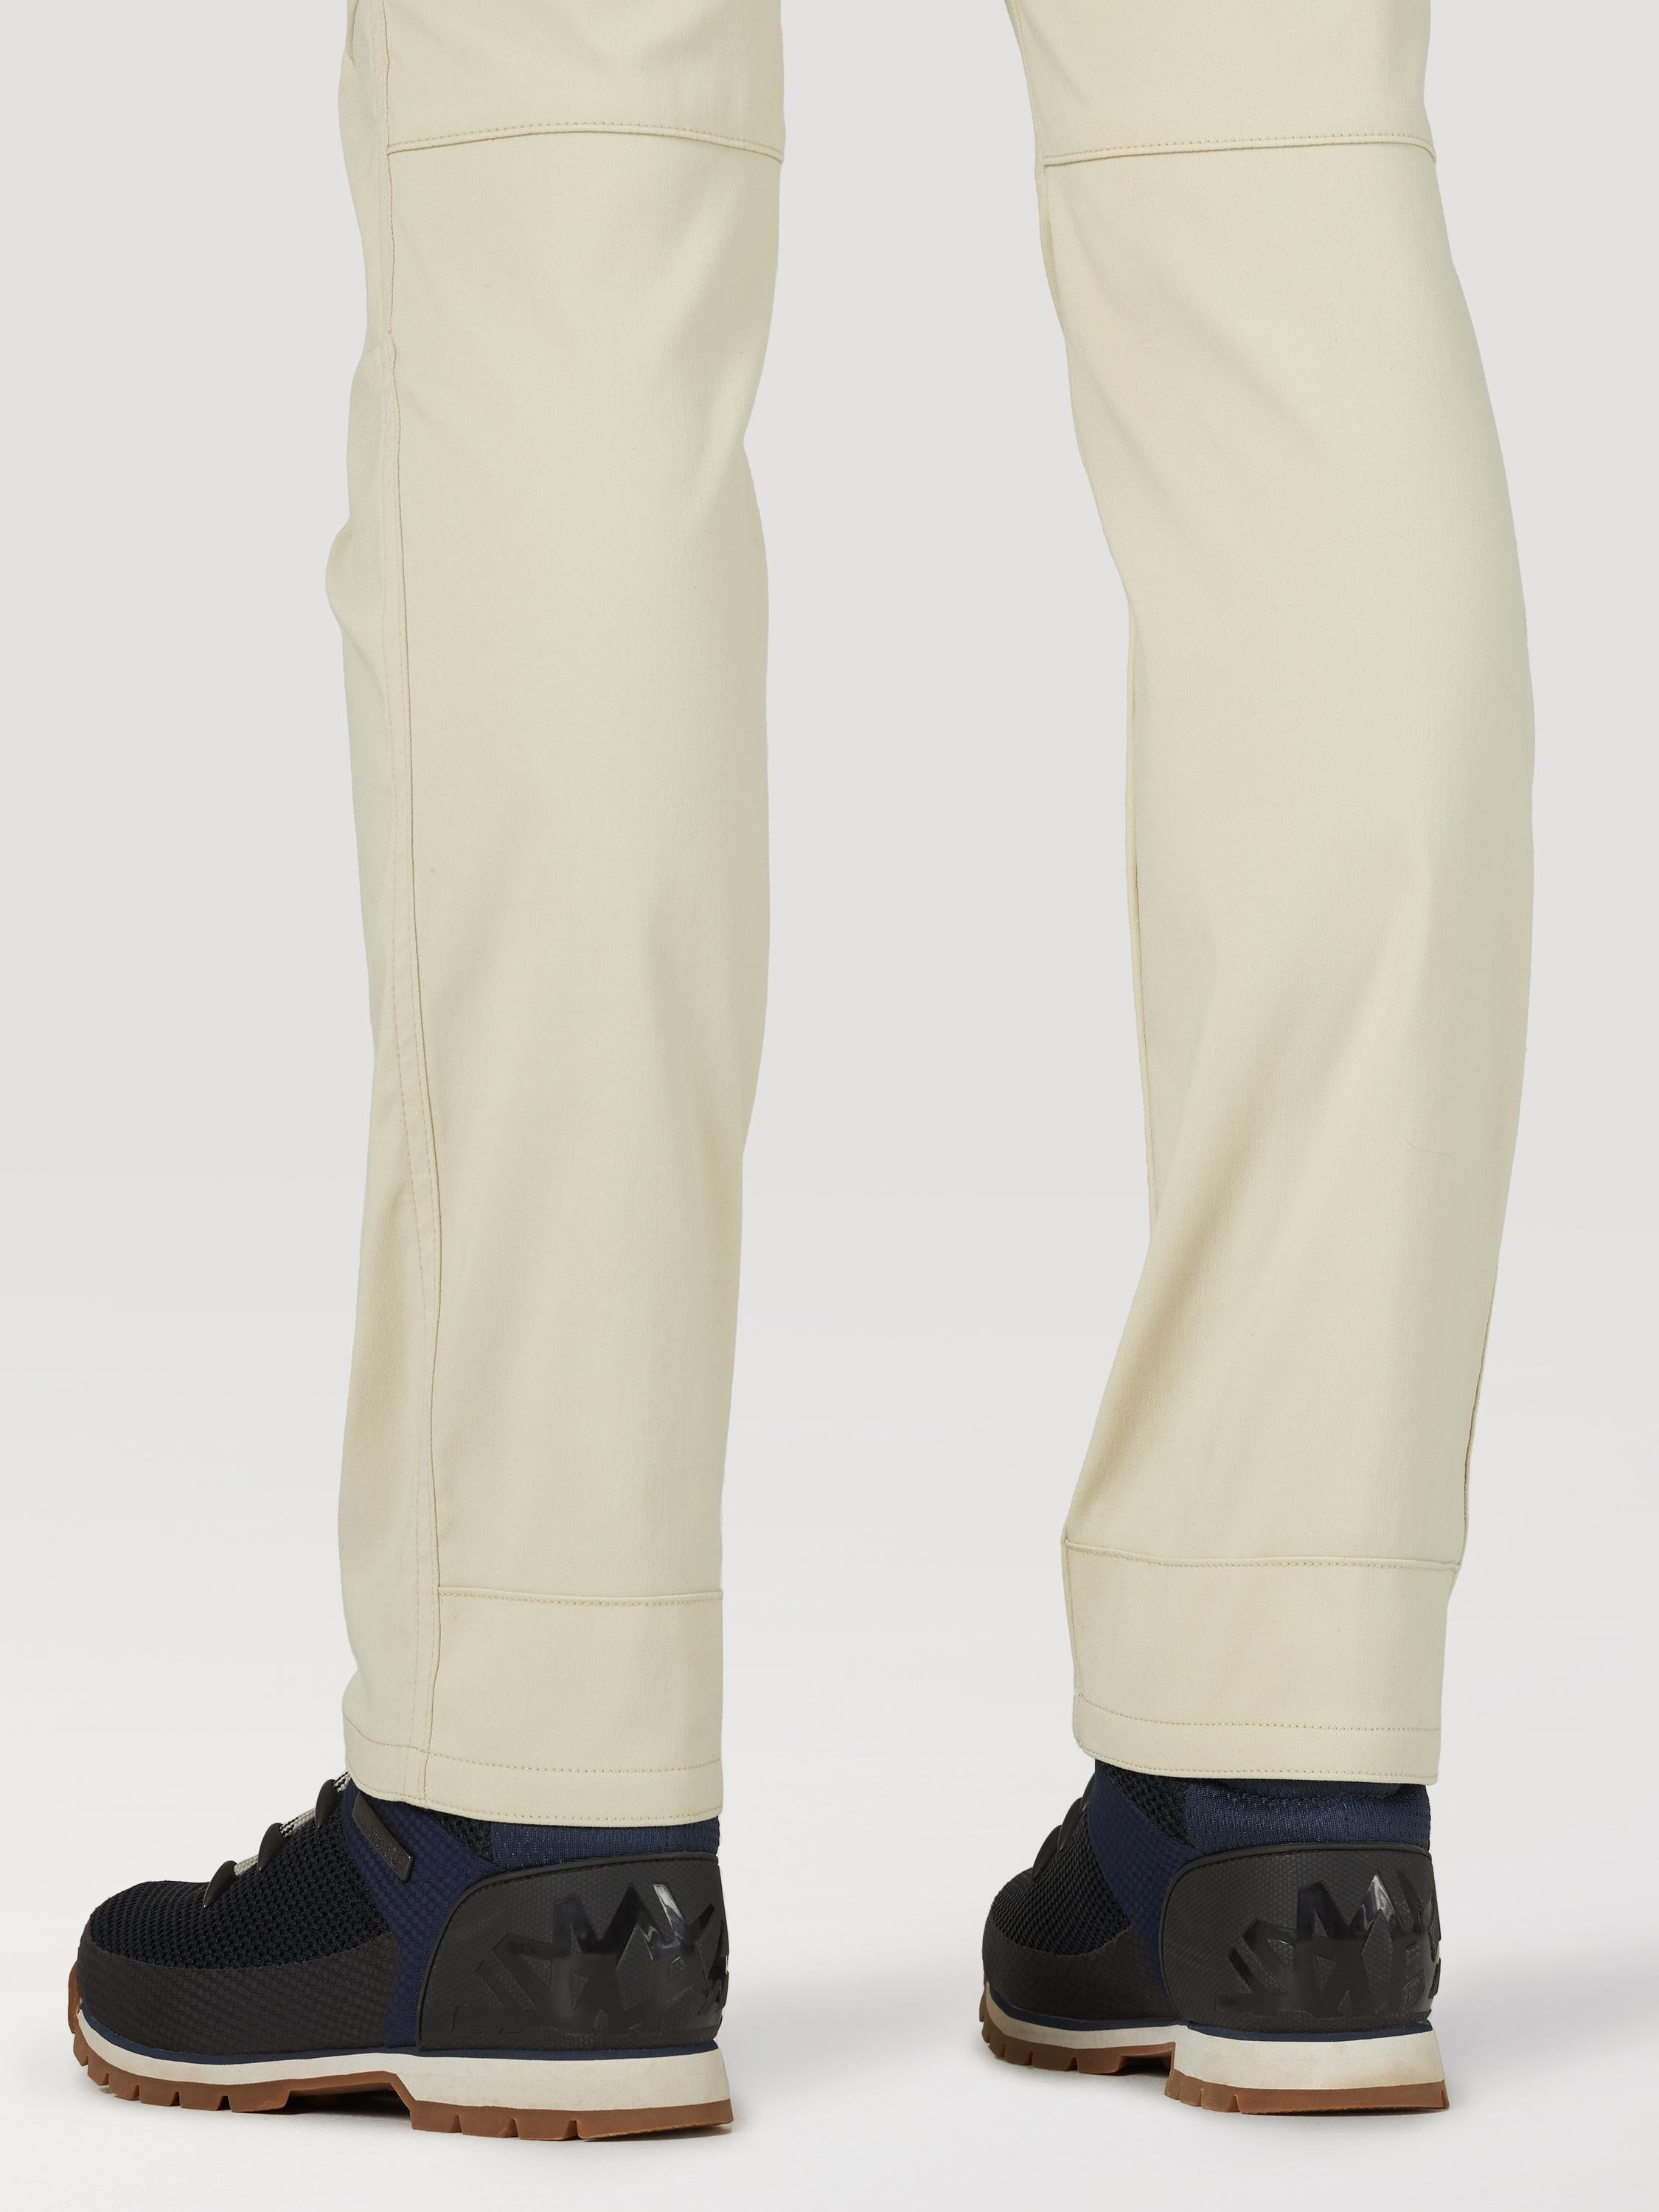 All Terrain Gear Slim Utility Pants in Pelican Hosen Wrangler   